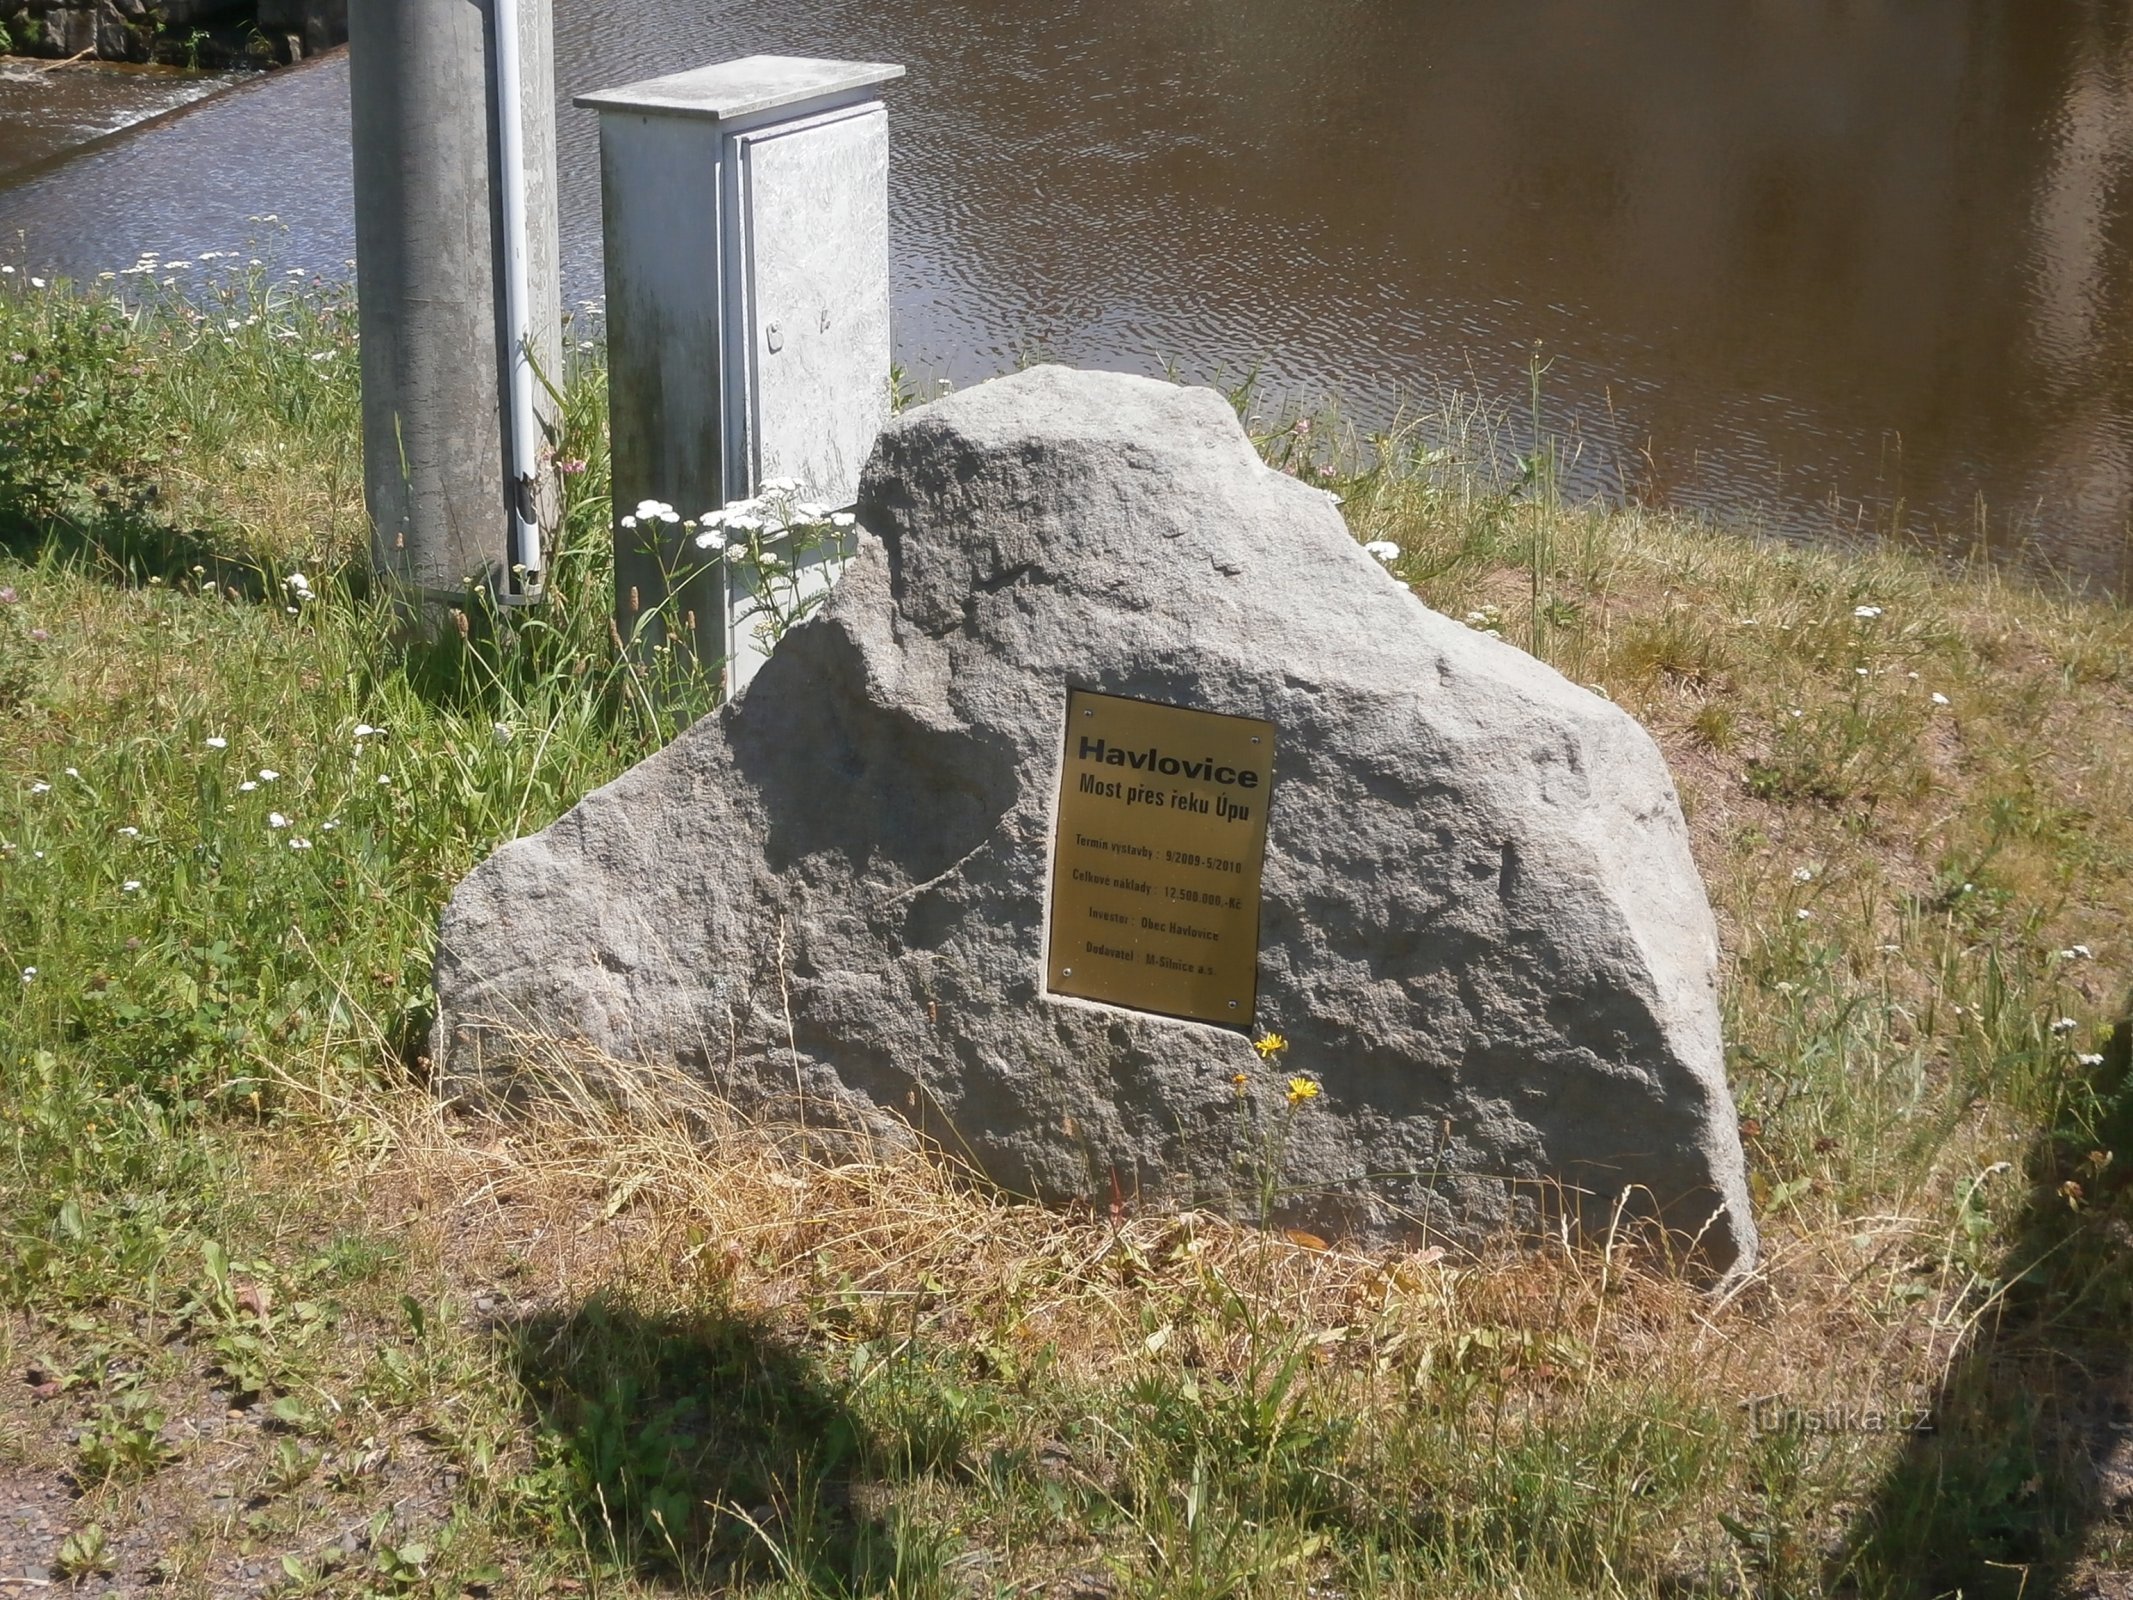 Mandle (Havlovice) 附近的桥梁建设纪念石